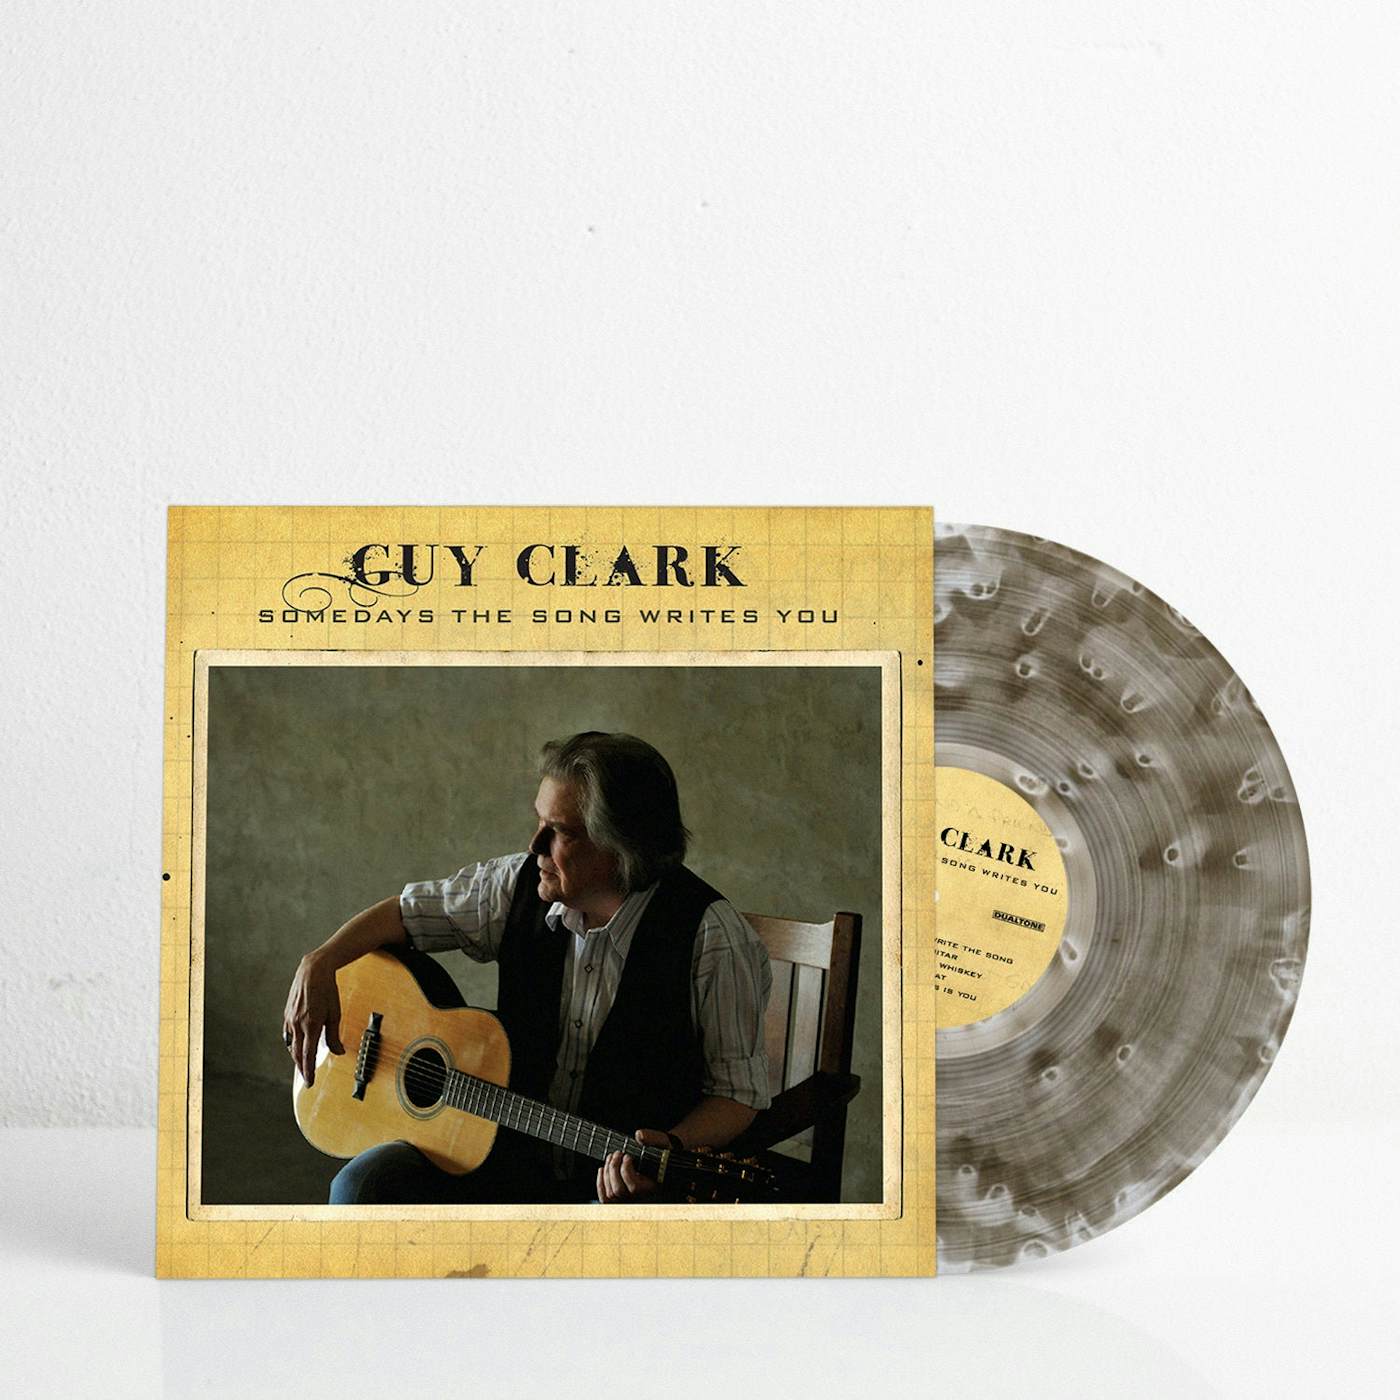 Guy Clark Somedays The Song Writes You (Ltd. Edition LP) (Vinyl)